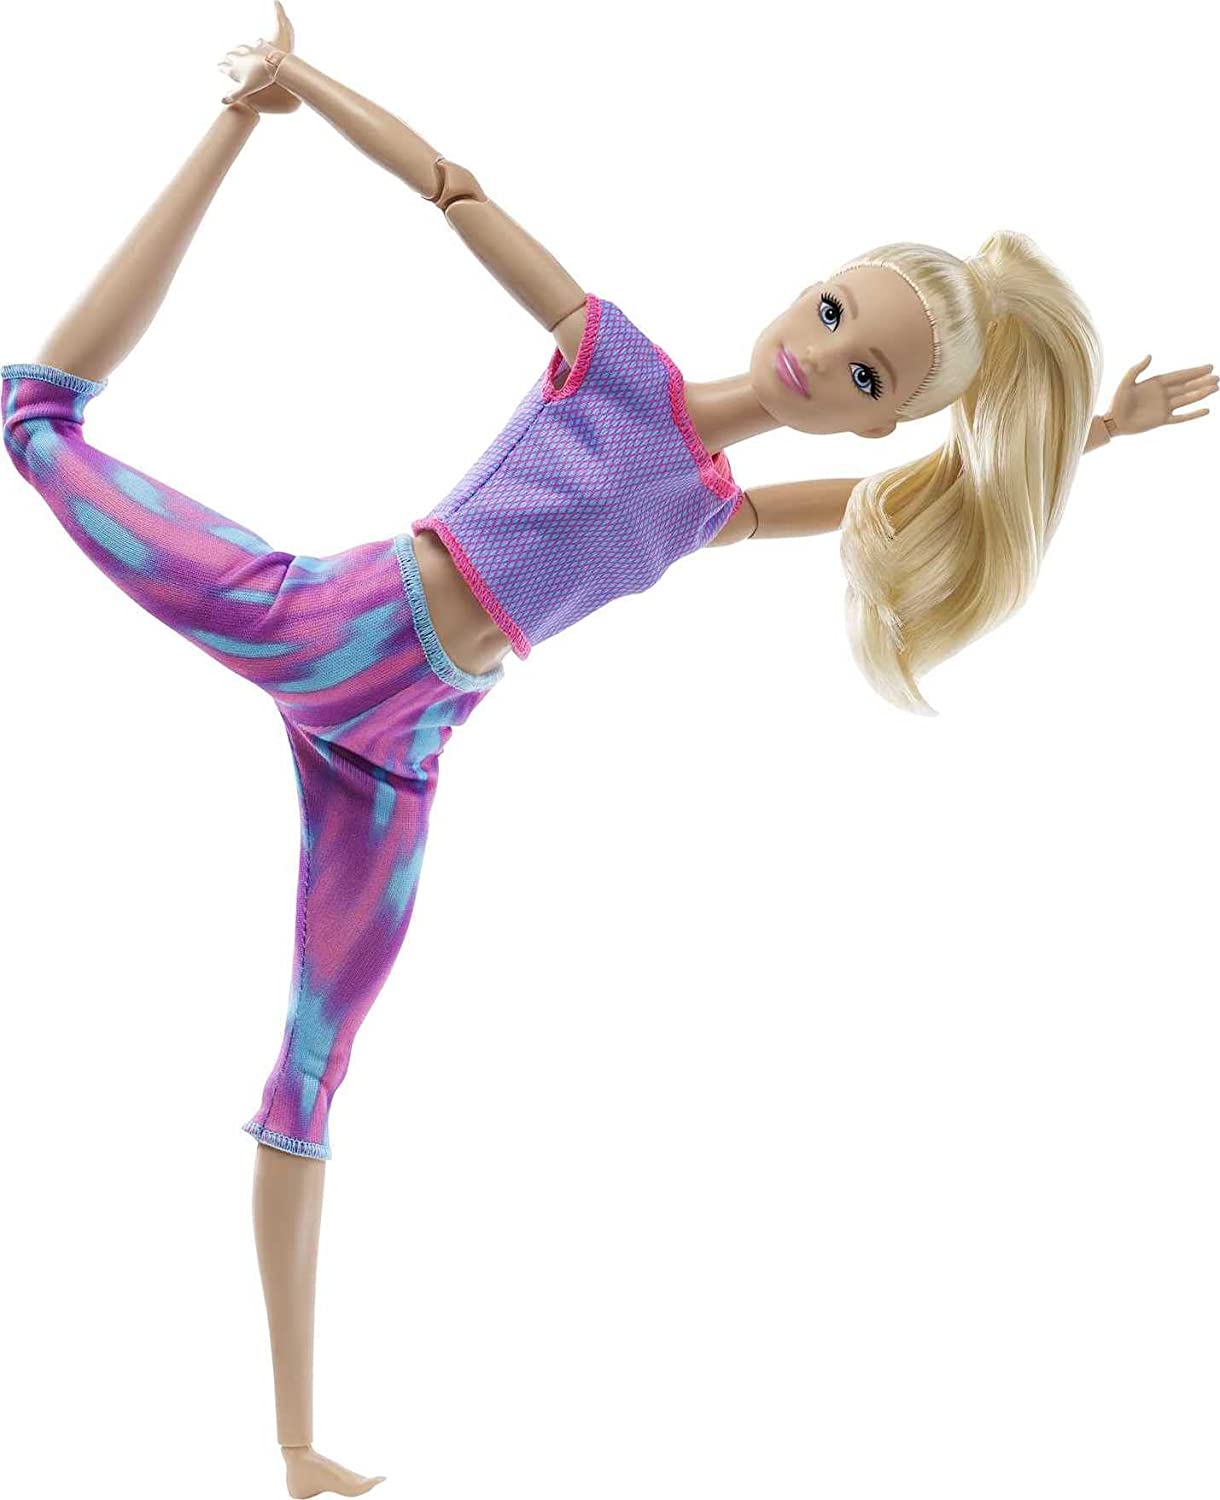 Barbie Bambola - Made To Move